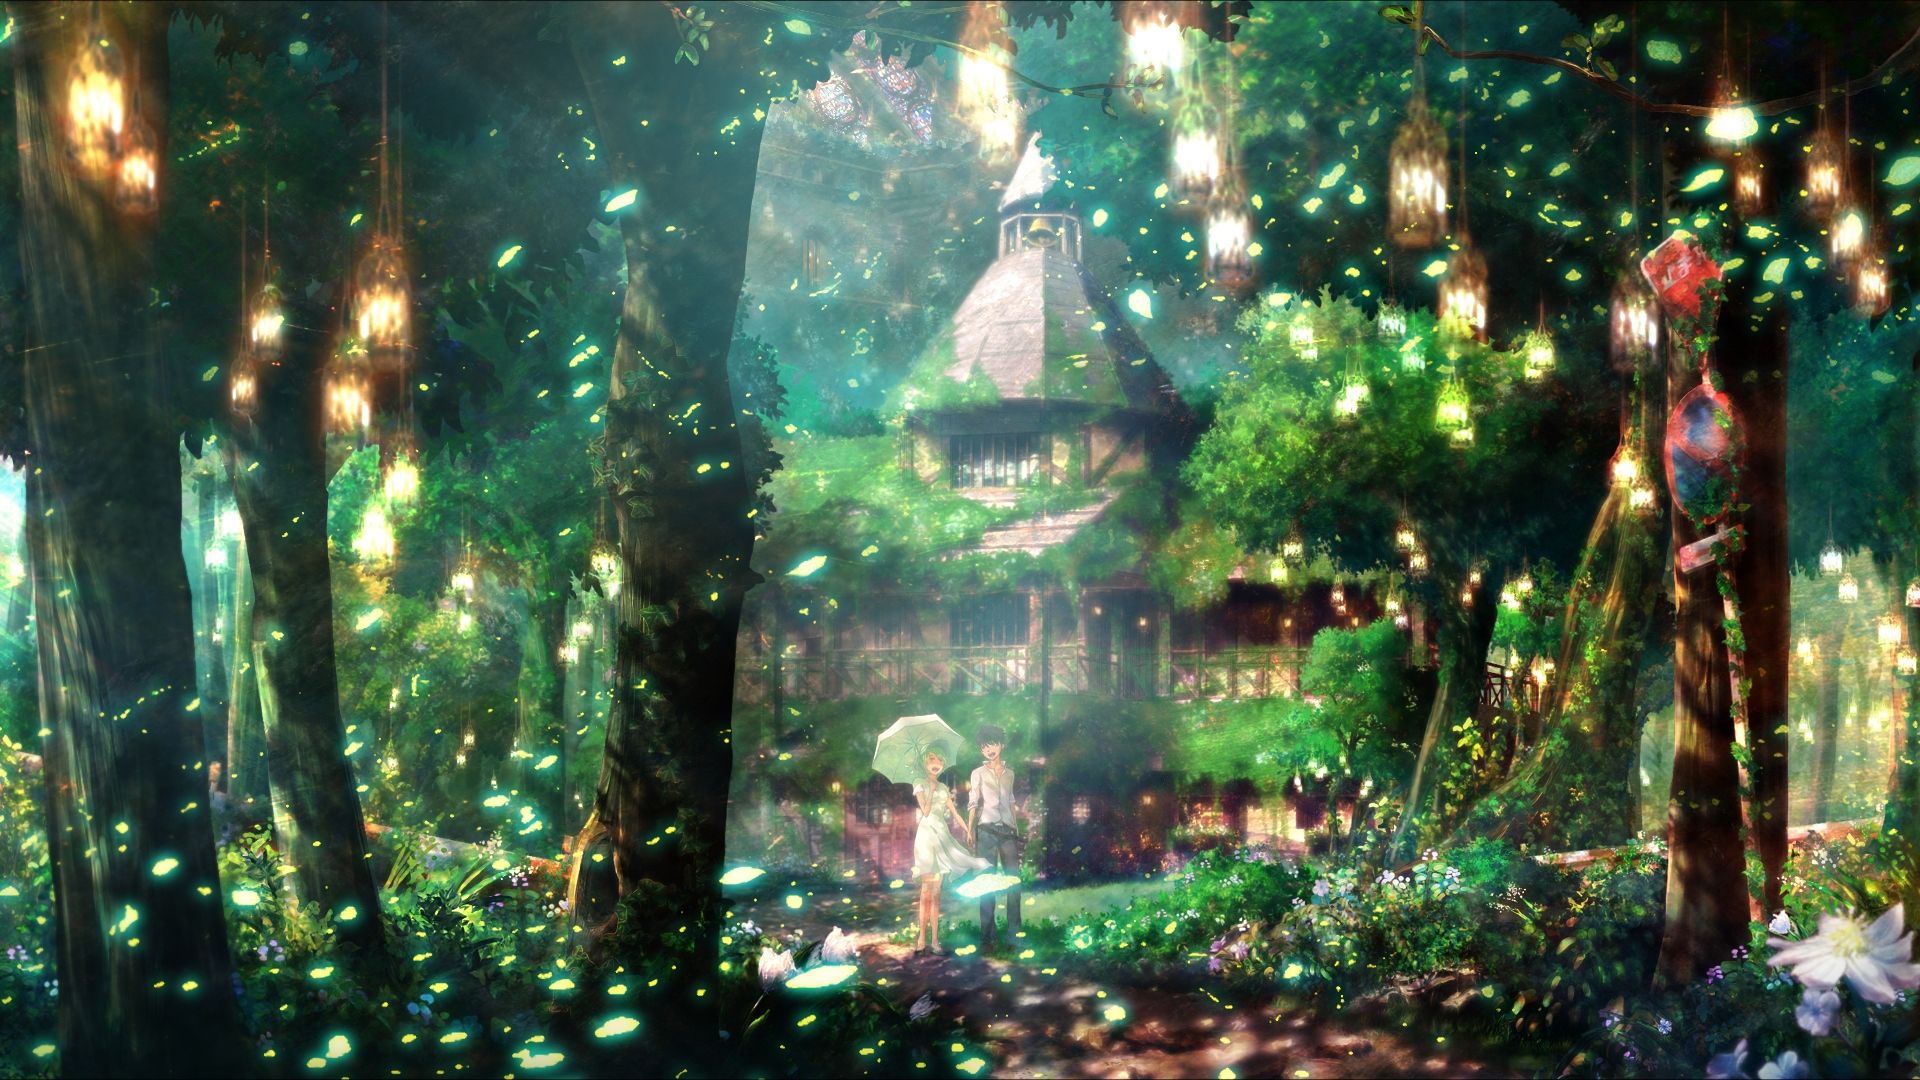 NovelAI Anime Forest 4K Wallpaper by DarkPrncsAI on DeviantArt